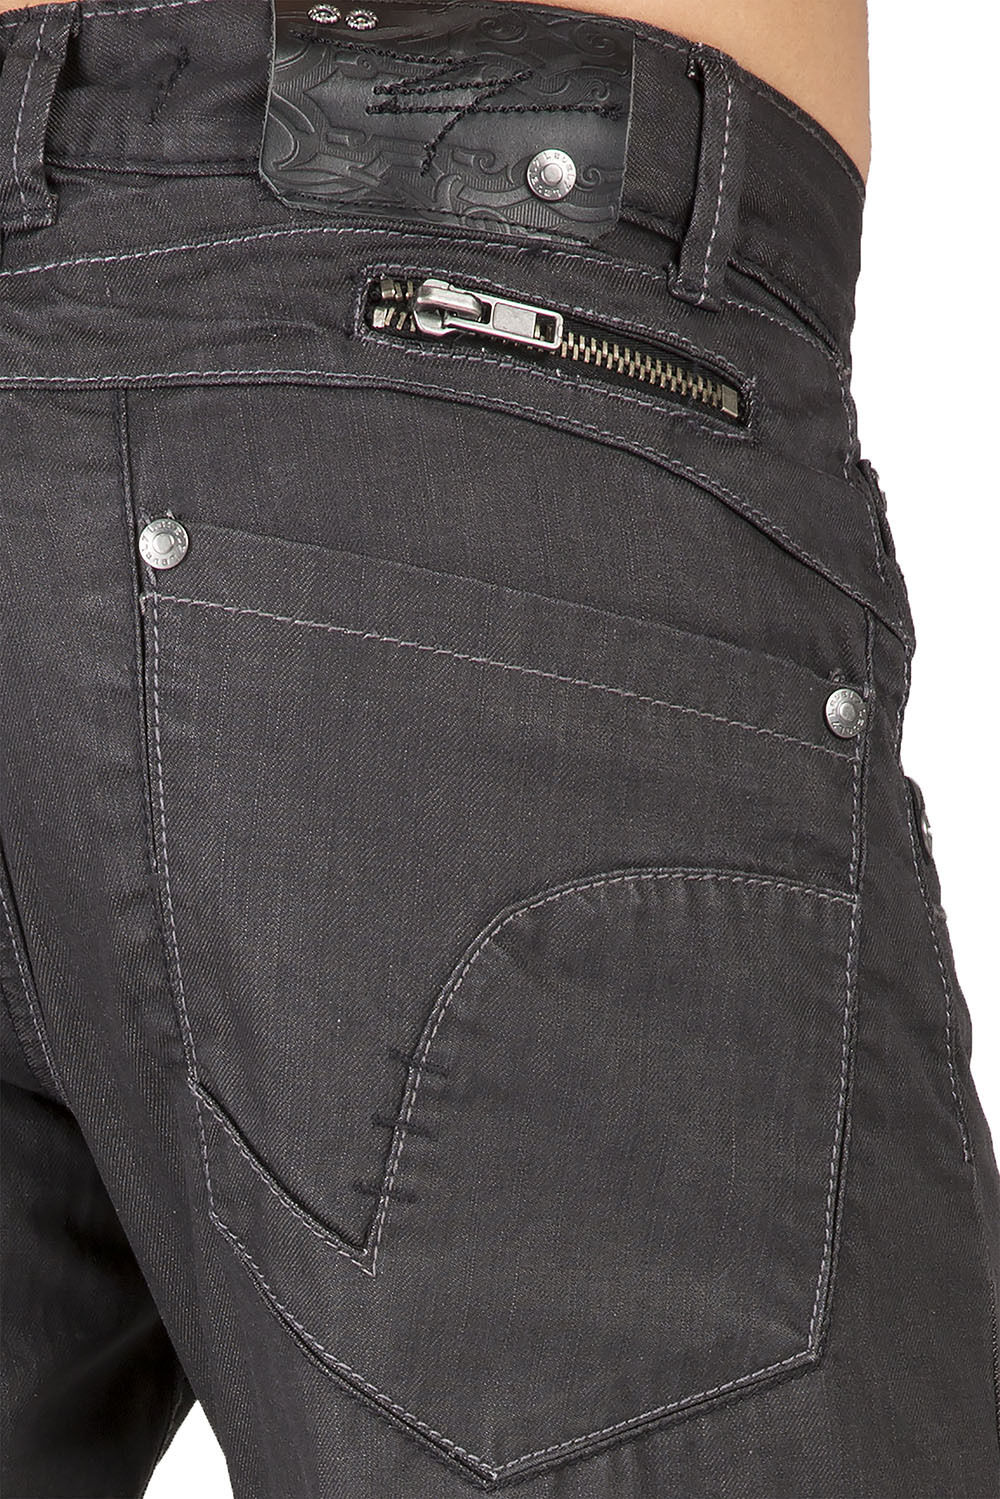 Relaxed Straight Coated Black Premium Denim Jeans Zipper utility Pocket